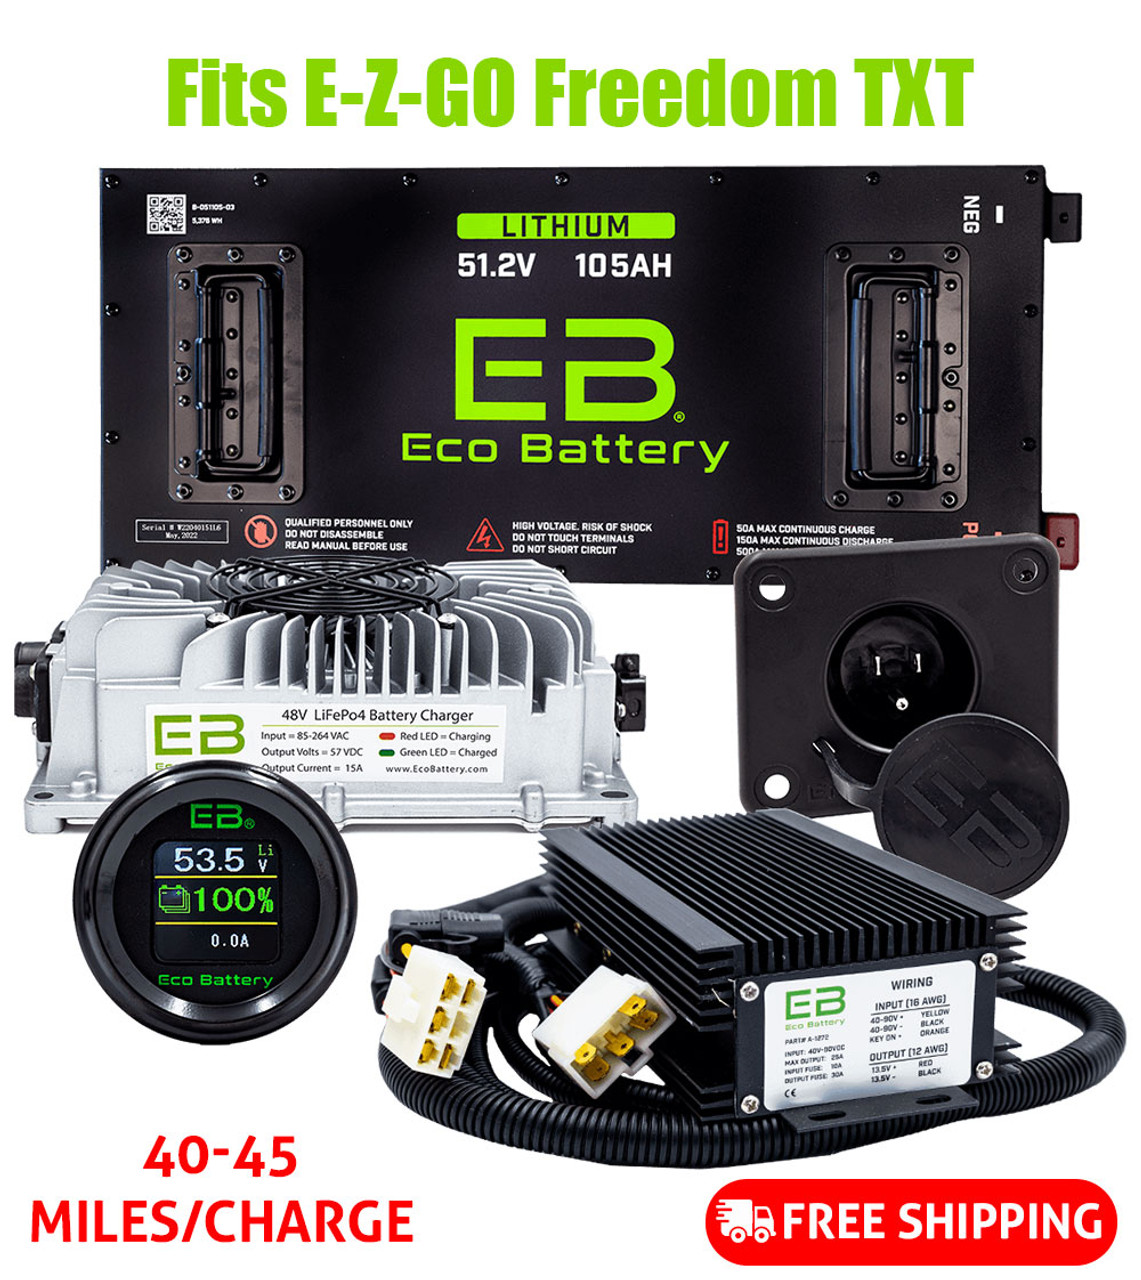 Eco Battery 48-51V 105aH "Skinny" E-Z-GO Freedom TXT Lithium Golf Cart Battery Bundle Kit with Charger & 12V Converter, B-3281